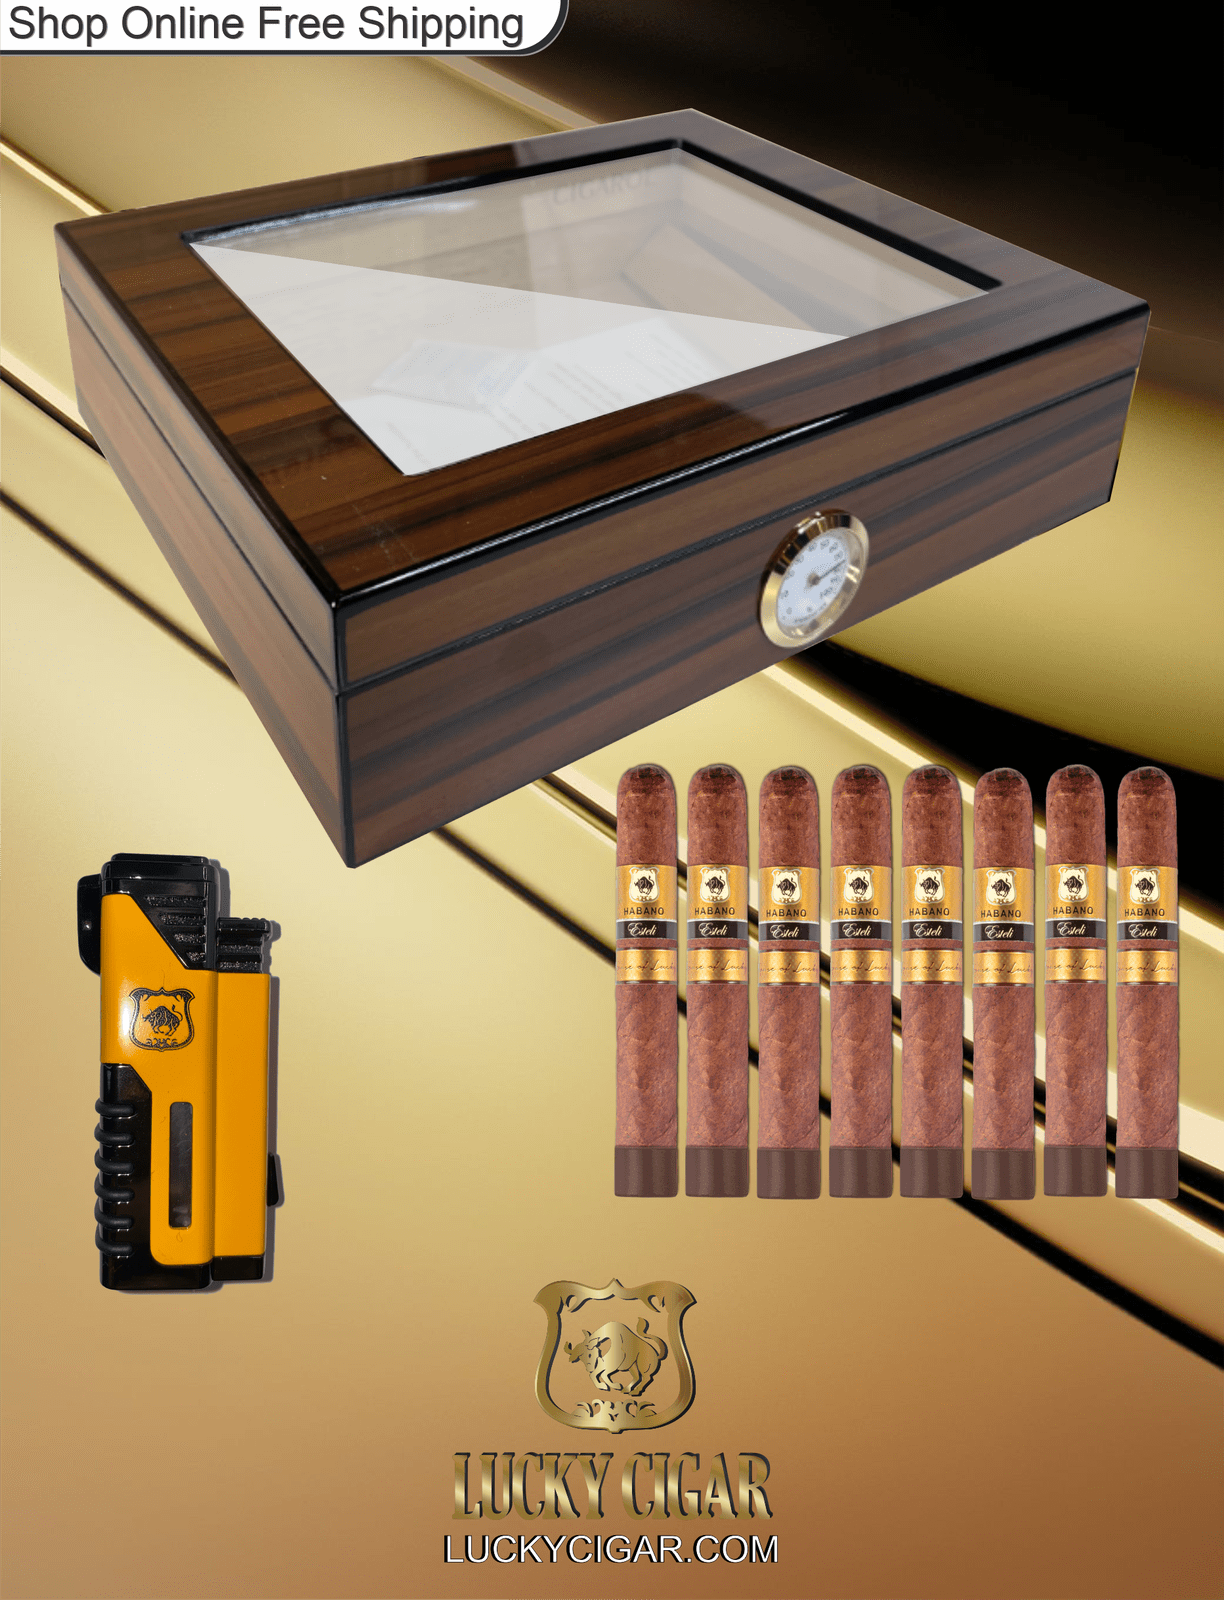 Lucky Cigar Sampler Sets: Set of 8 Habano Esteli Toro Cigars with Torch, Desk Humidor